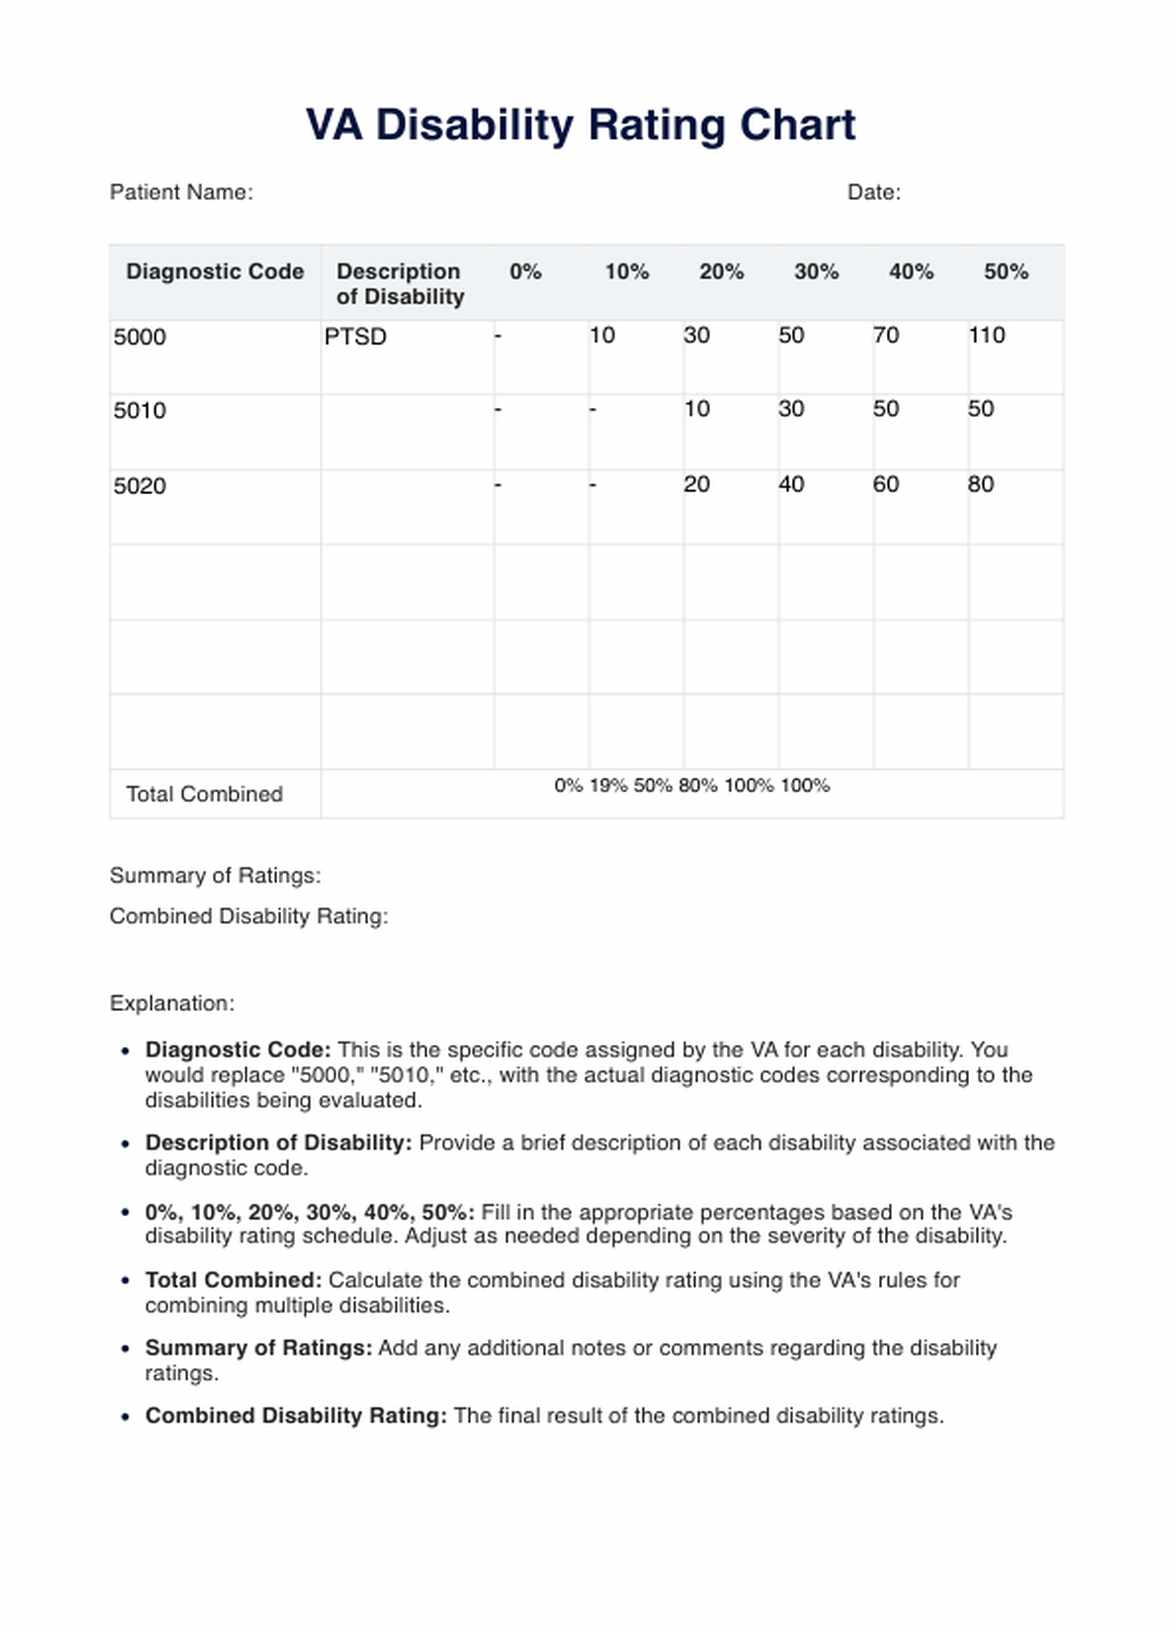 VA Disability Rating Chart PDF Example